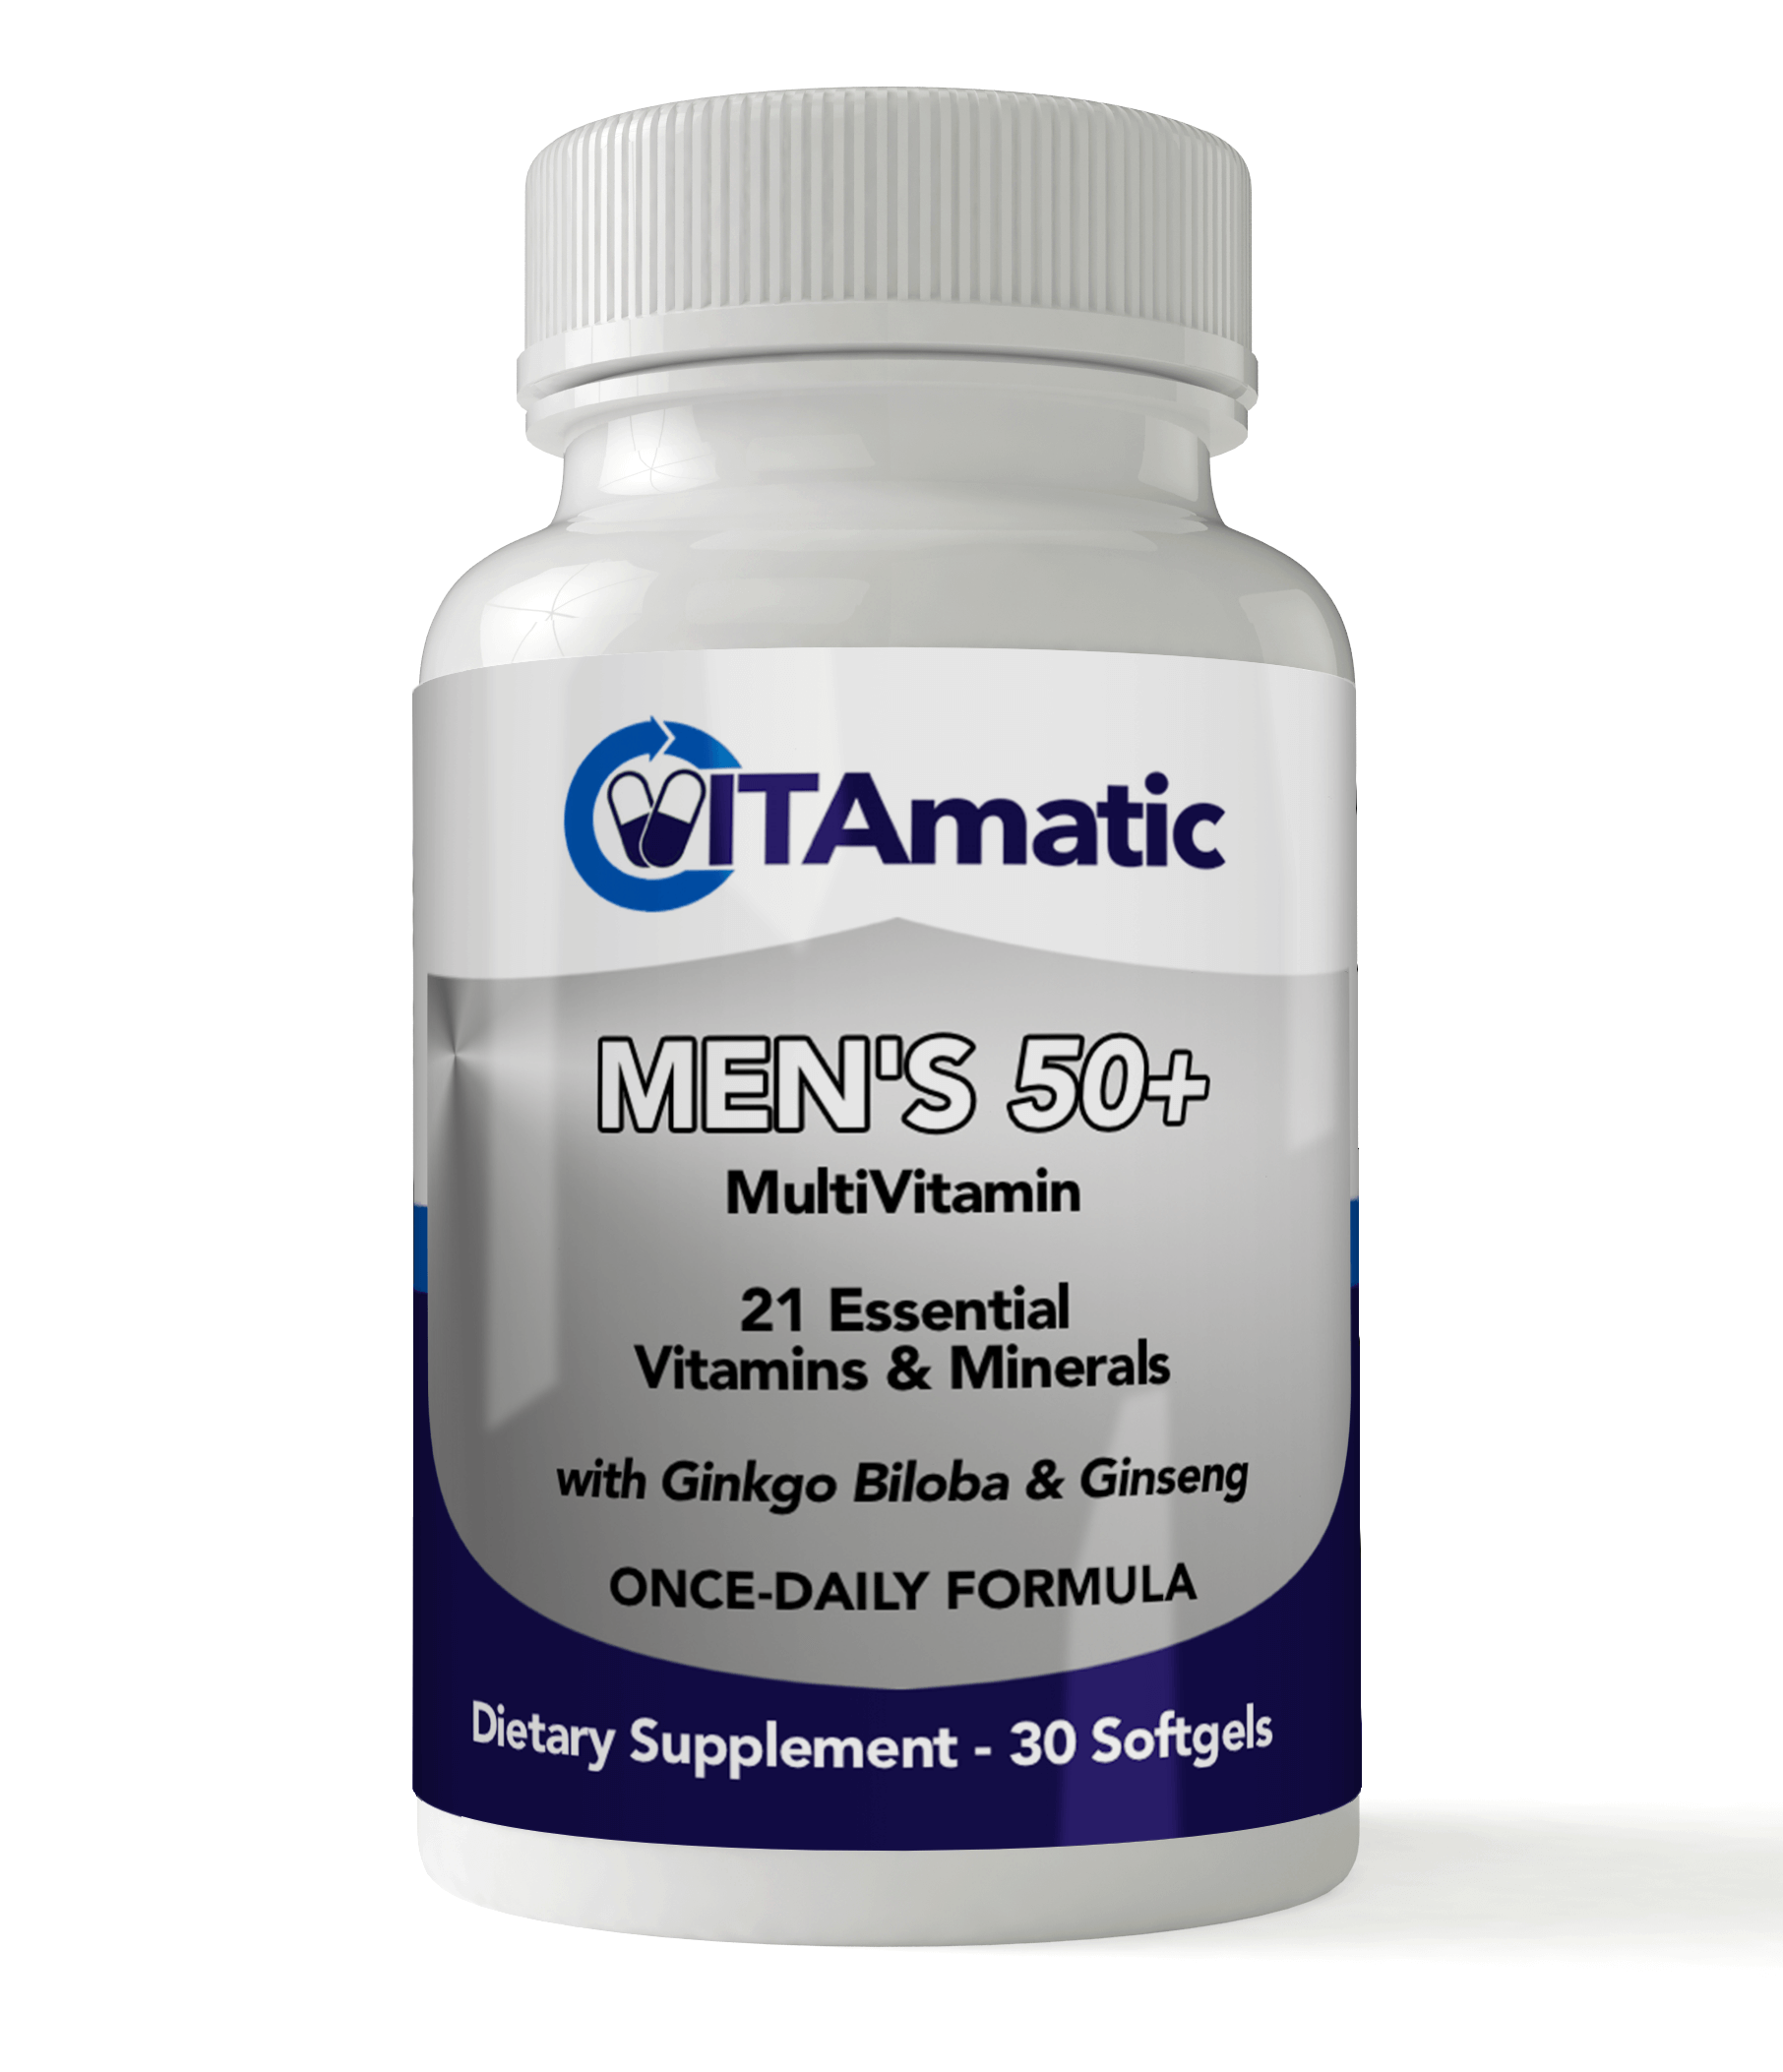 Vitamatic Mens 50+ Multivitamin